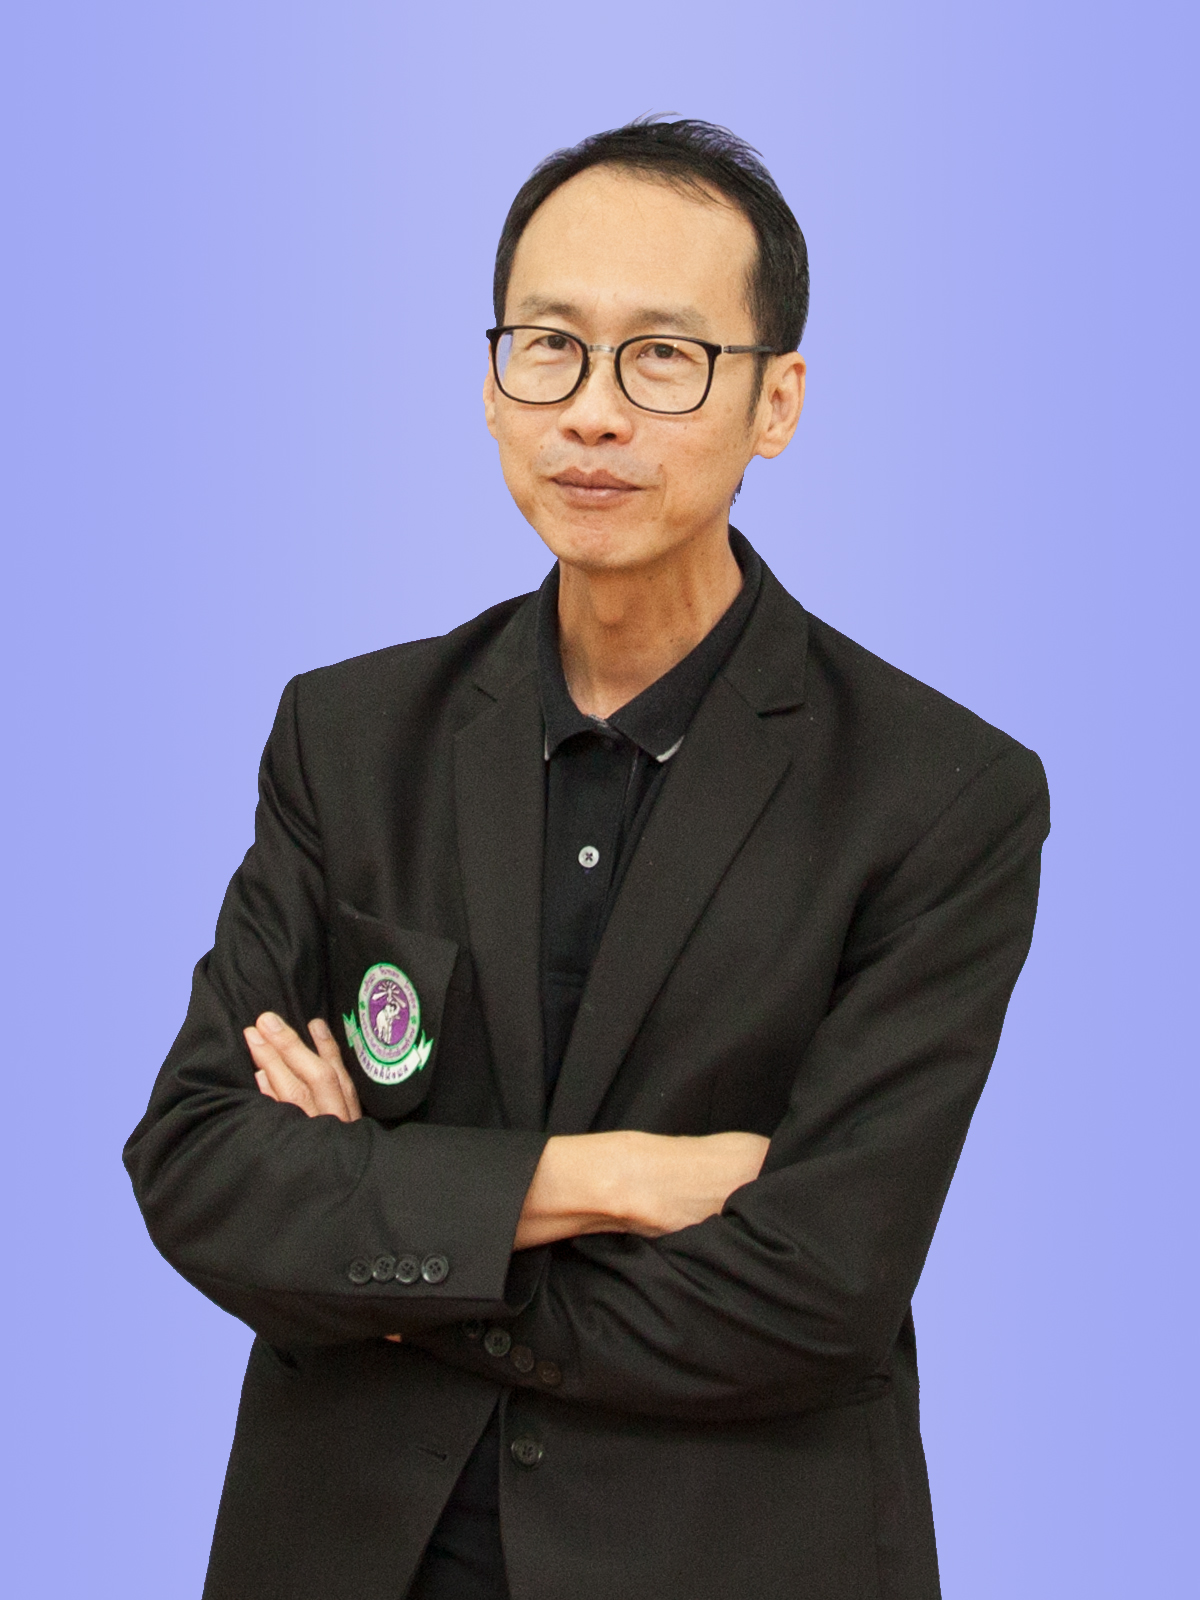 Associate Professor Somchai Preechasinlapakun
Head of Legal Research and Development Center